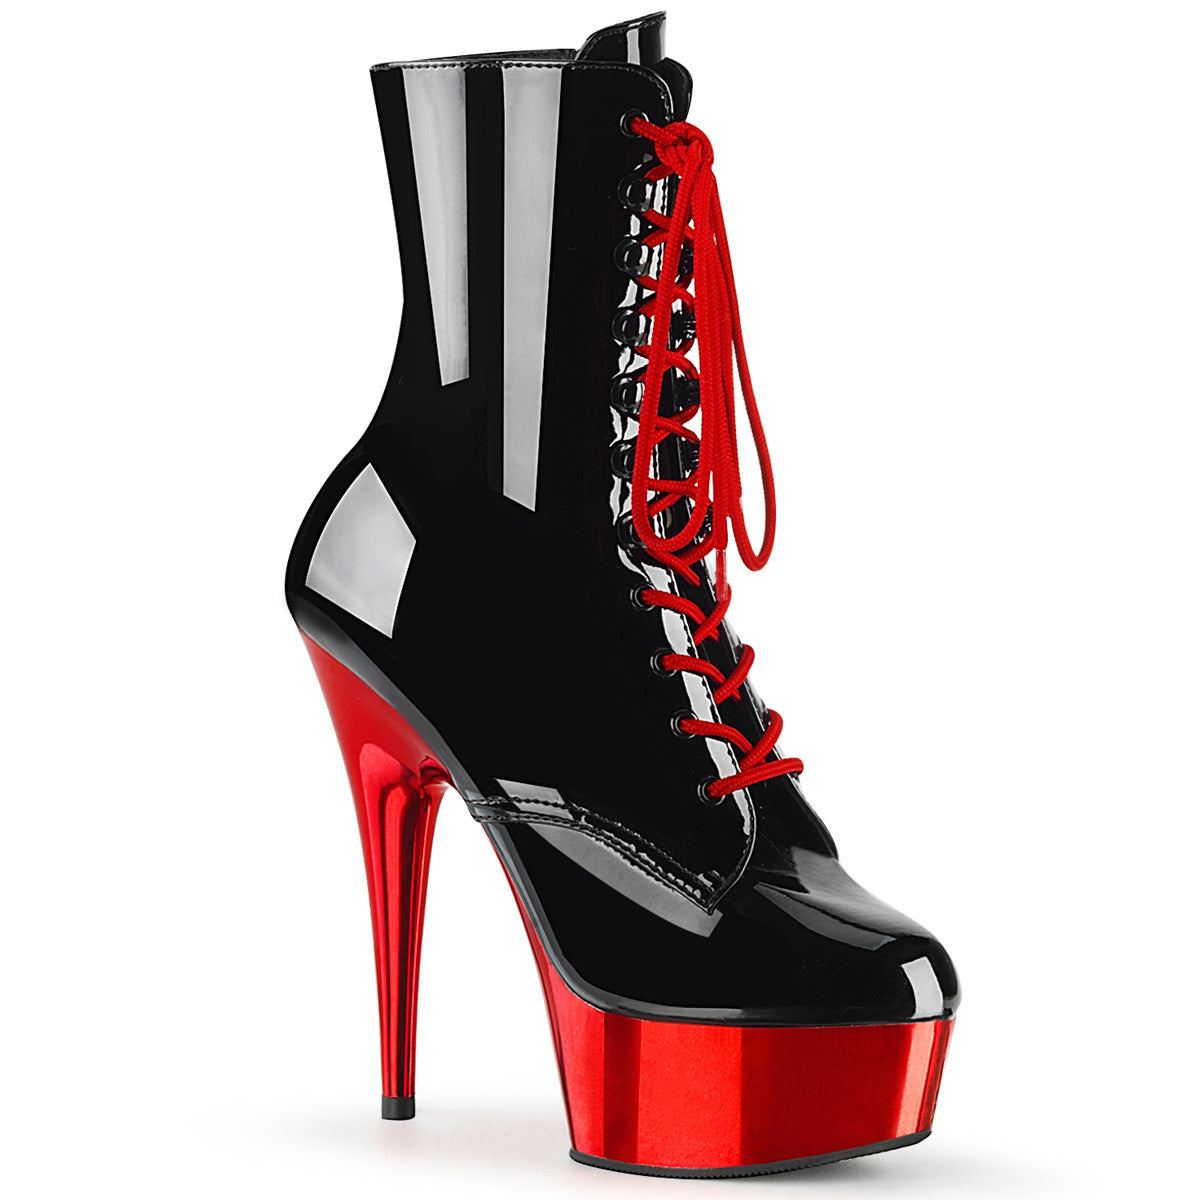 Delight-1020 Black - Red Chrome Platform Ankle Boots